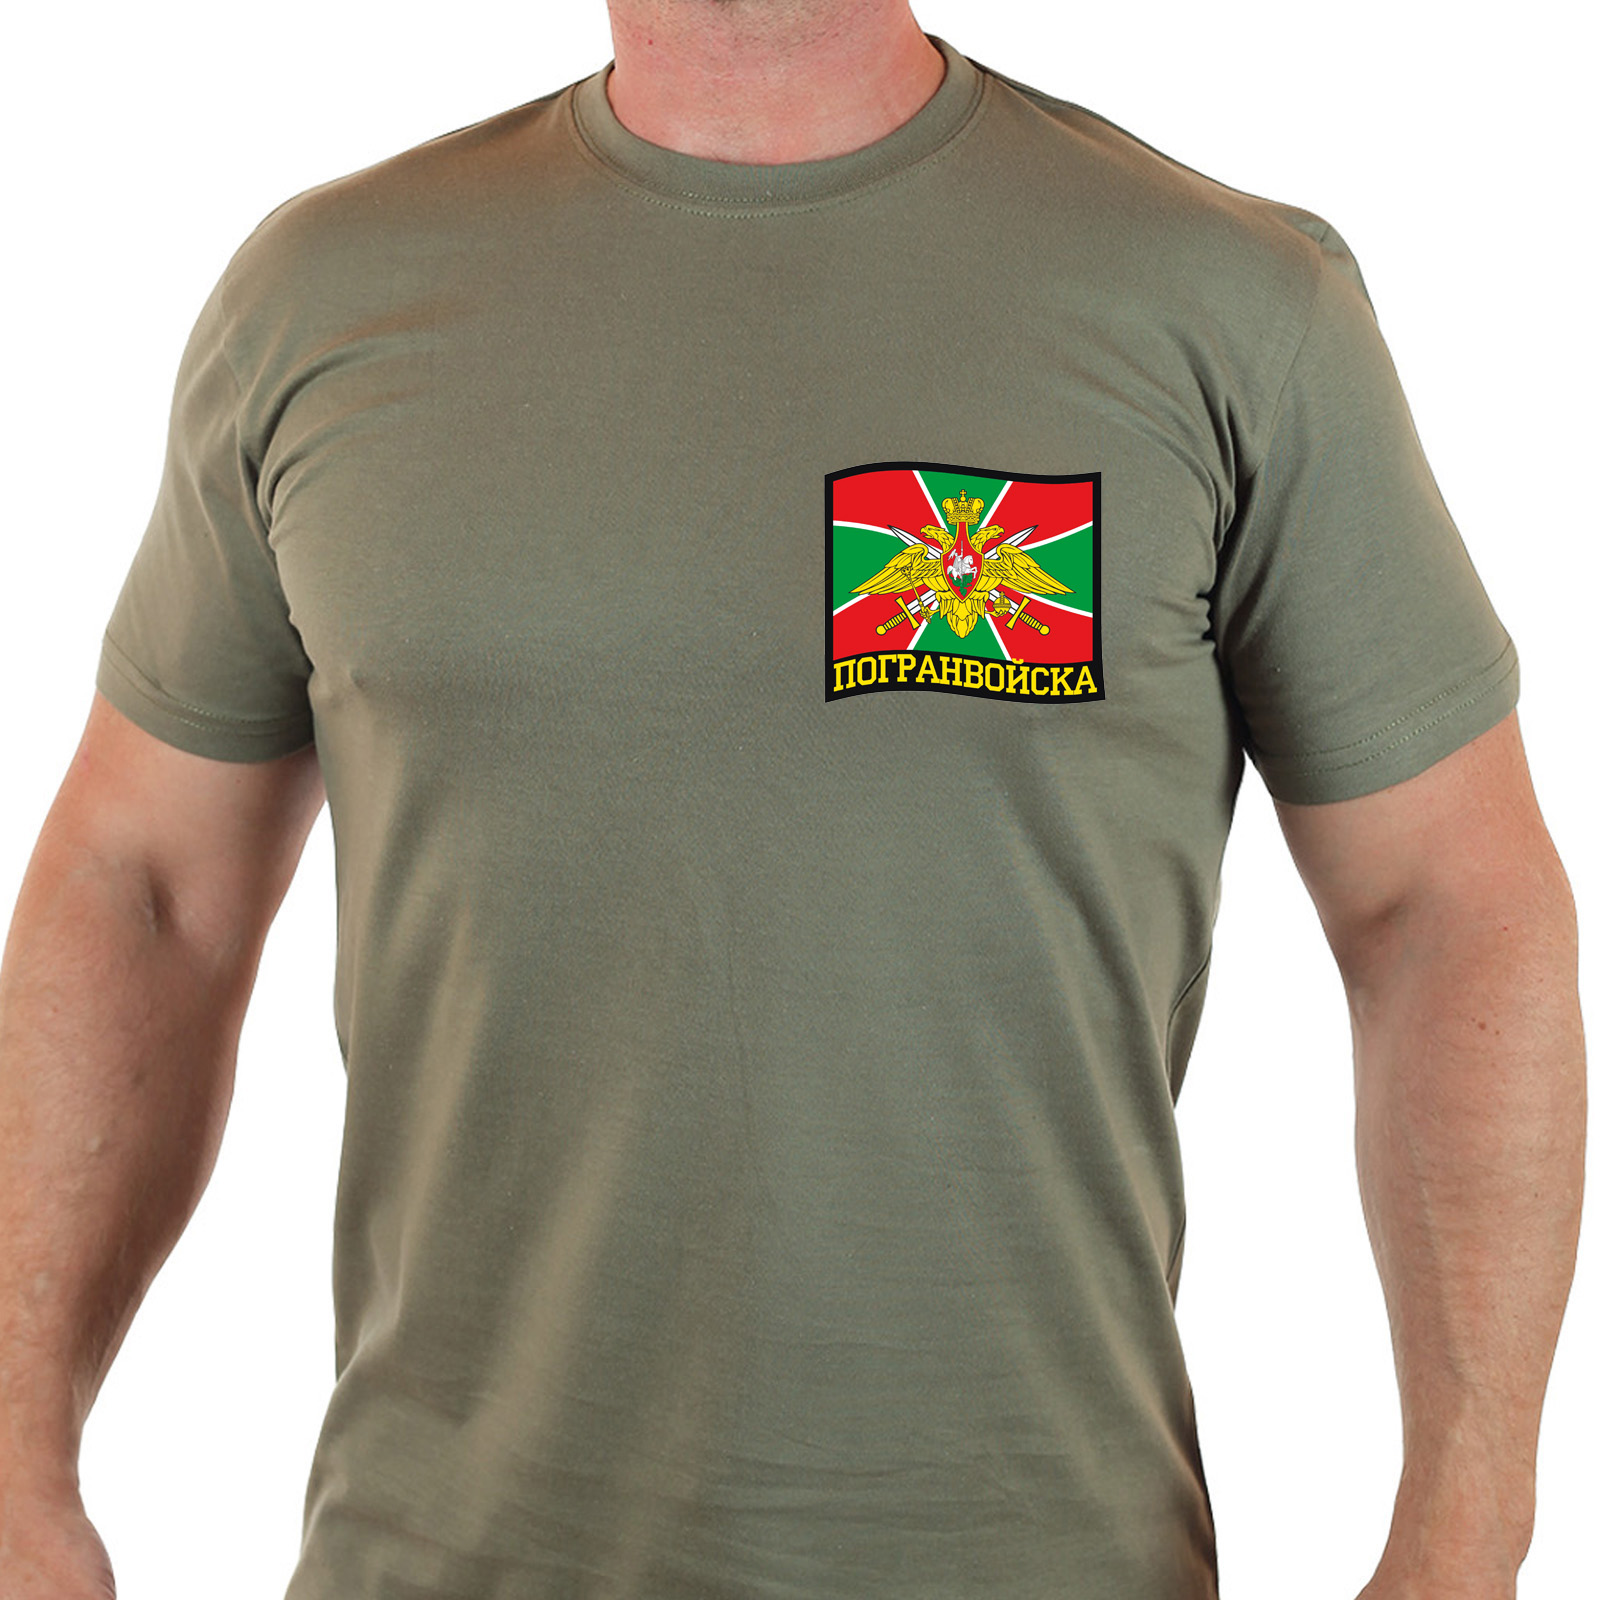 Армейская футболка пограничника с флагом на груди